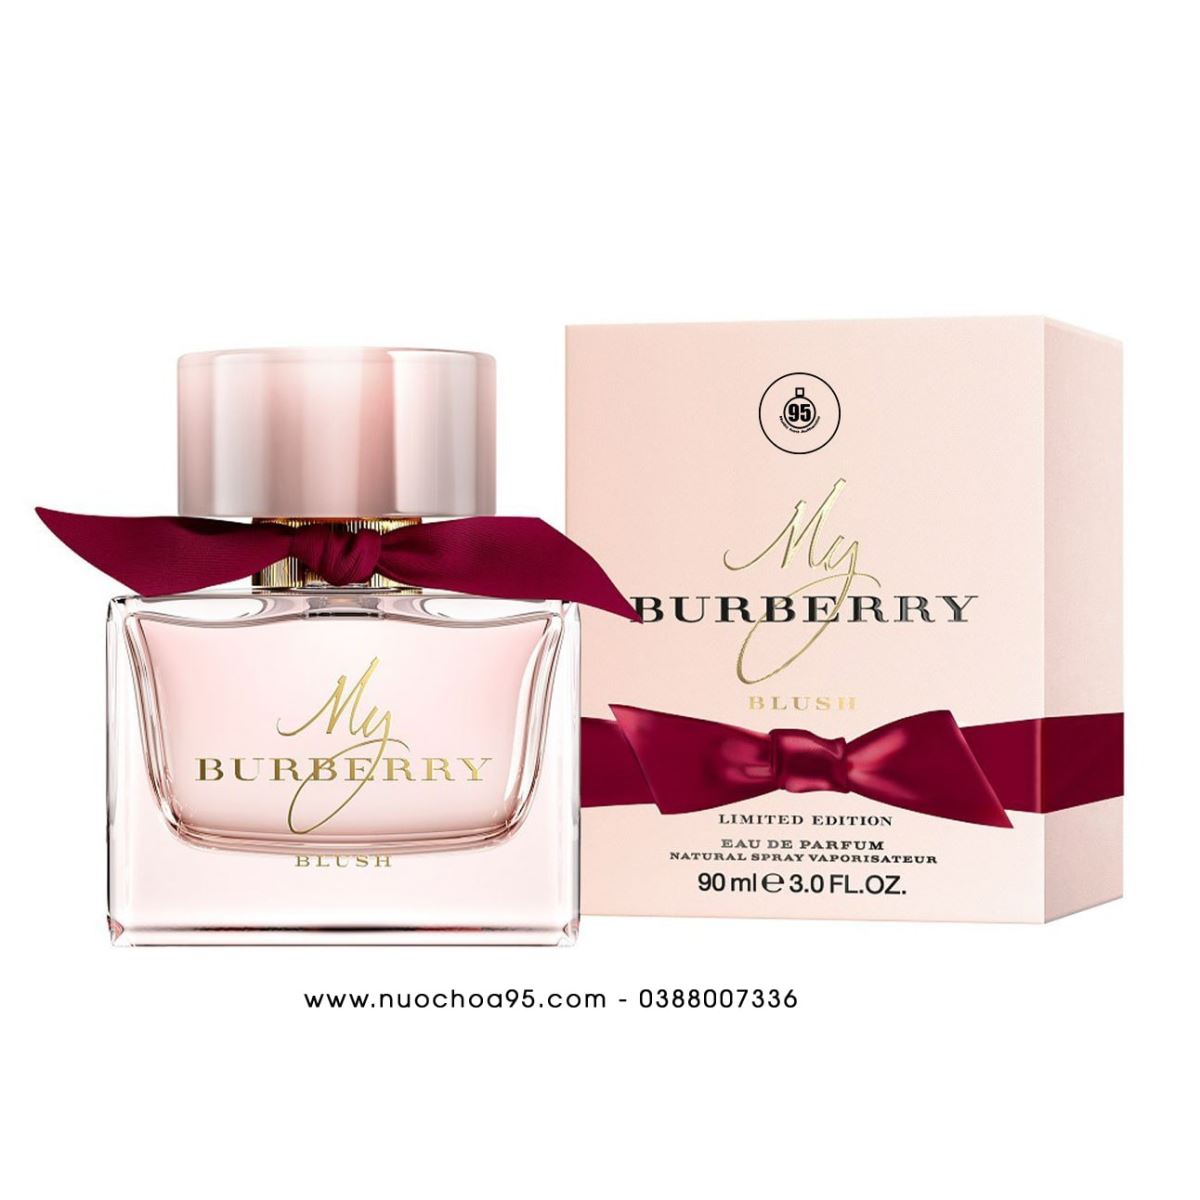 Nước hoa My Burberry Blush Limited Edition